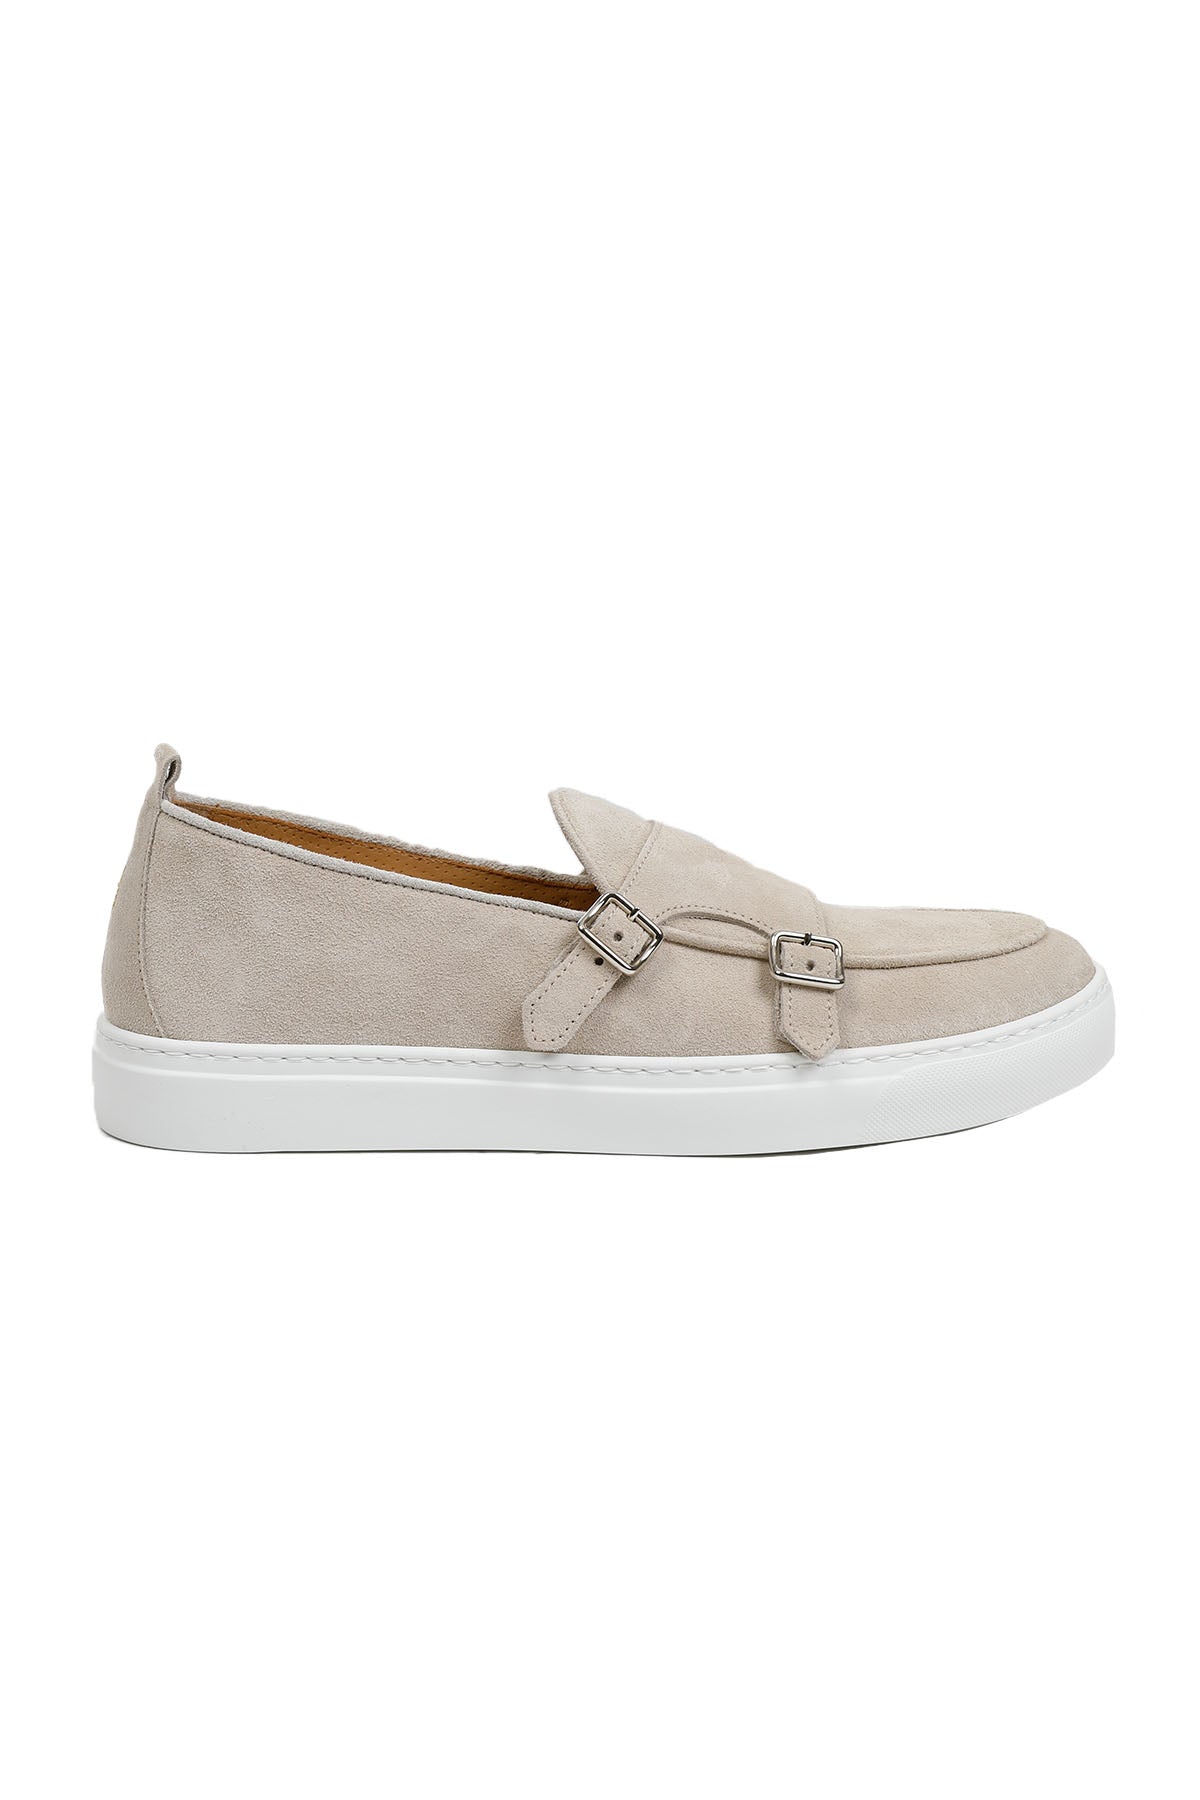 Henderson Tiff Çift Tokalı Monk Loafer Ayakkabı-Libas Trendy Fashion Store